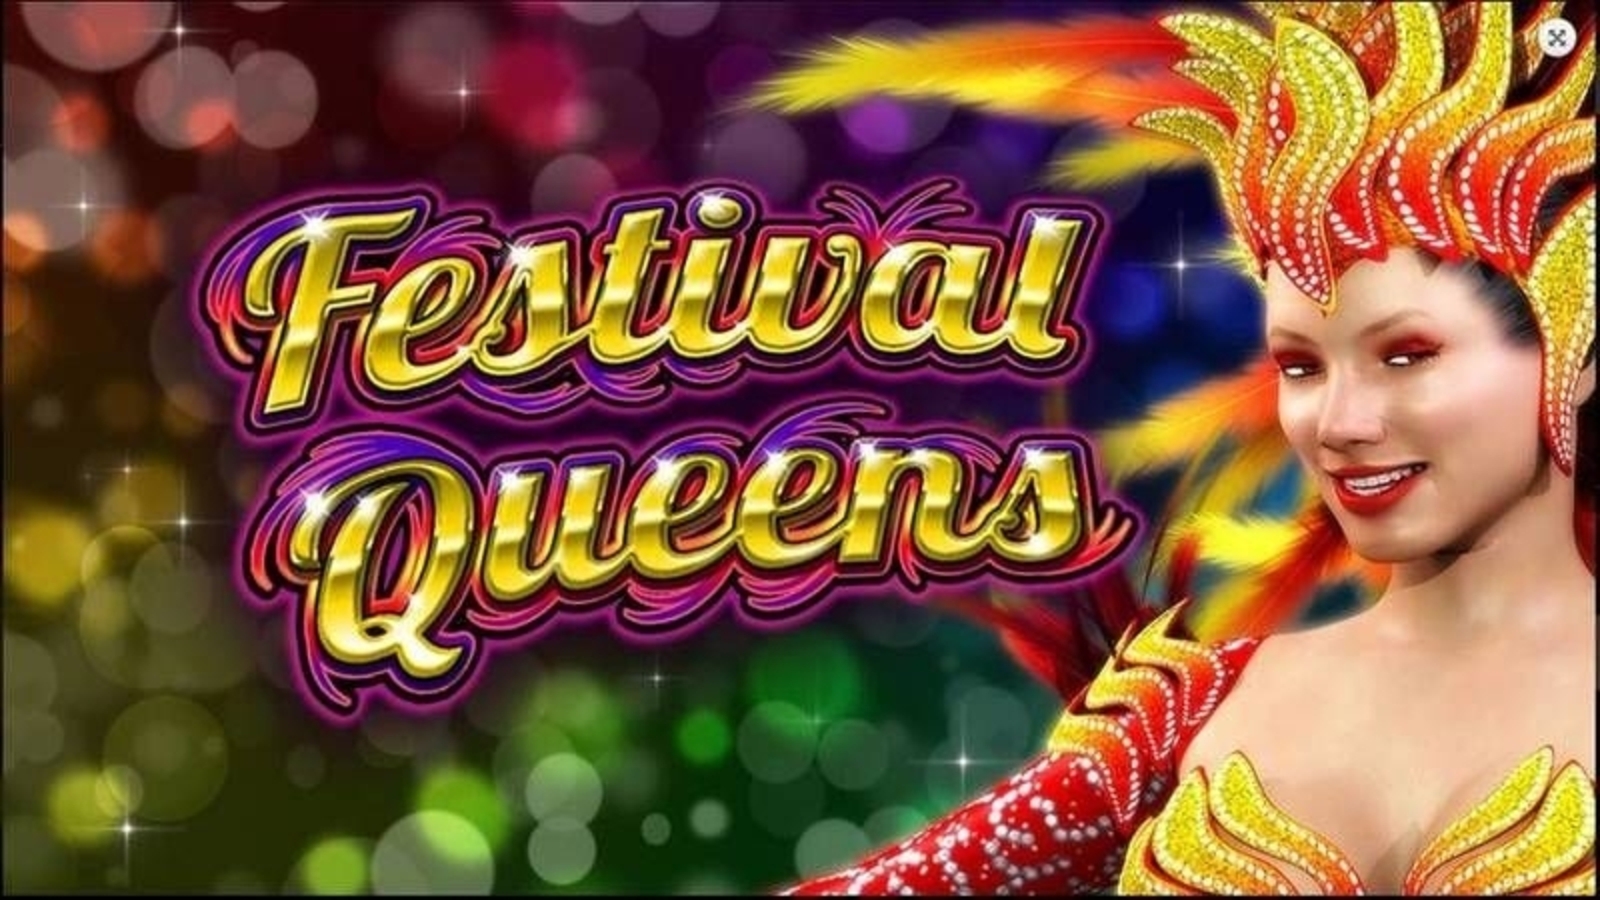 Festival Queen demo